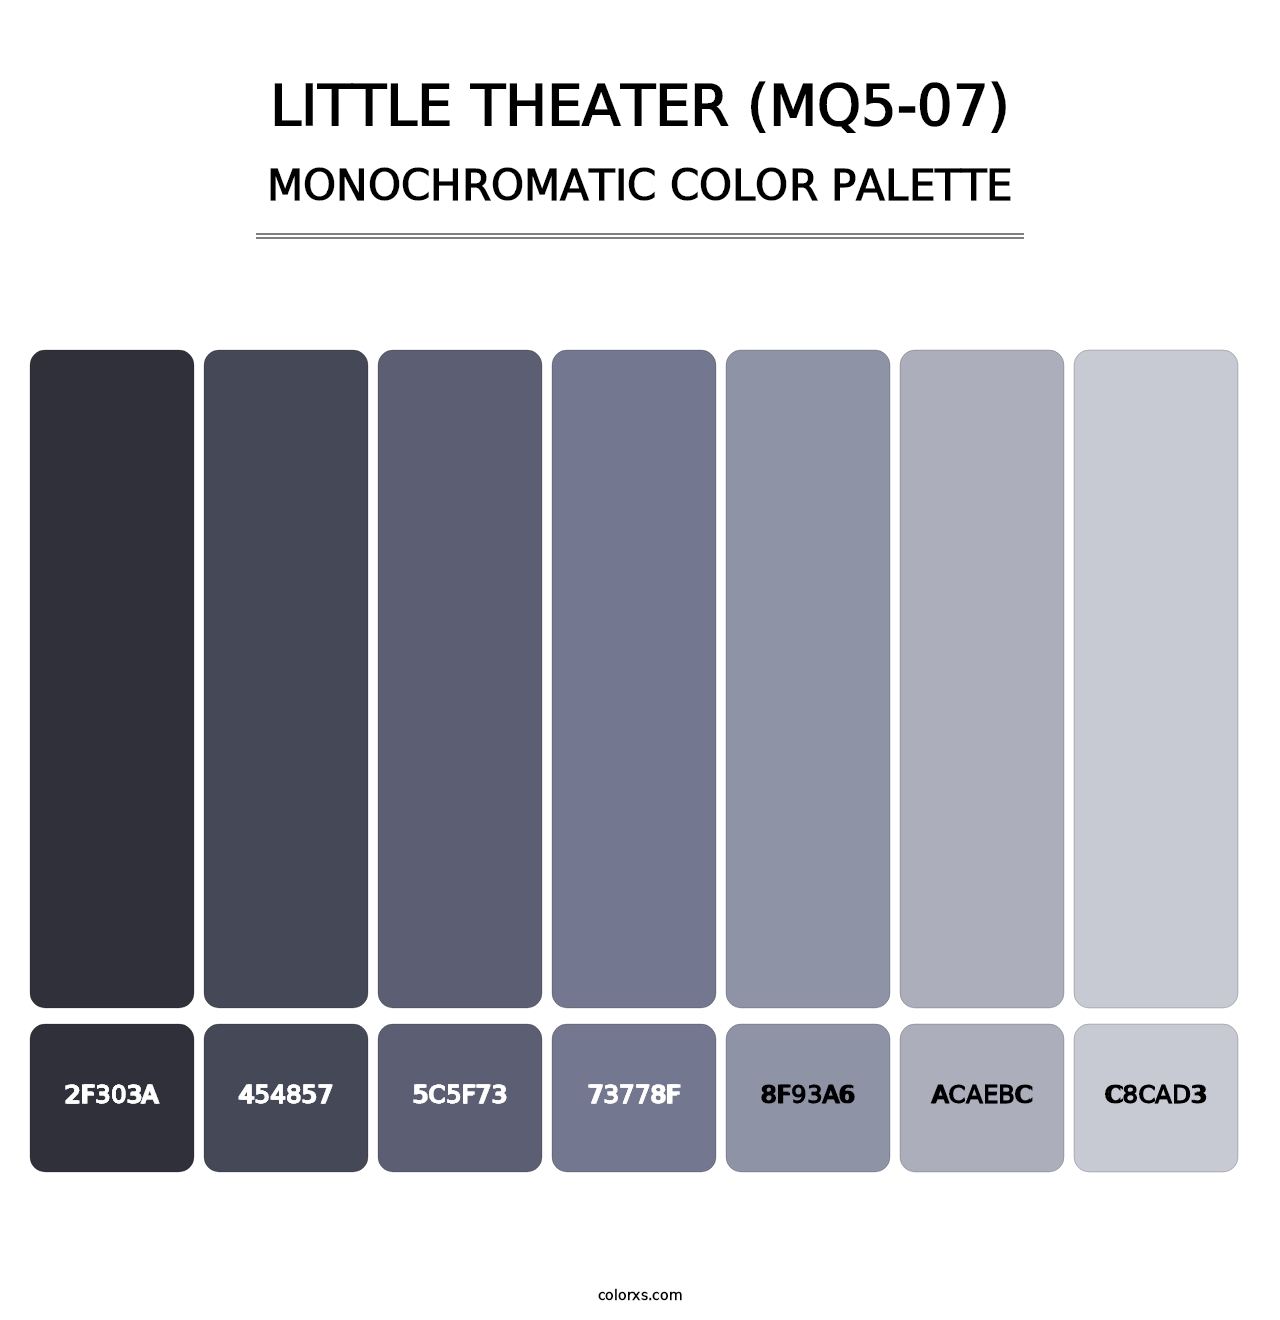 Little Theater (MQ5-07) - Monochromatic Color Palette